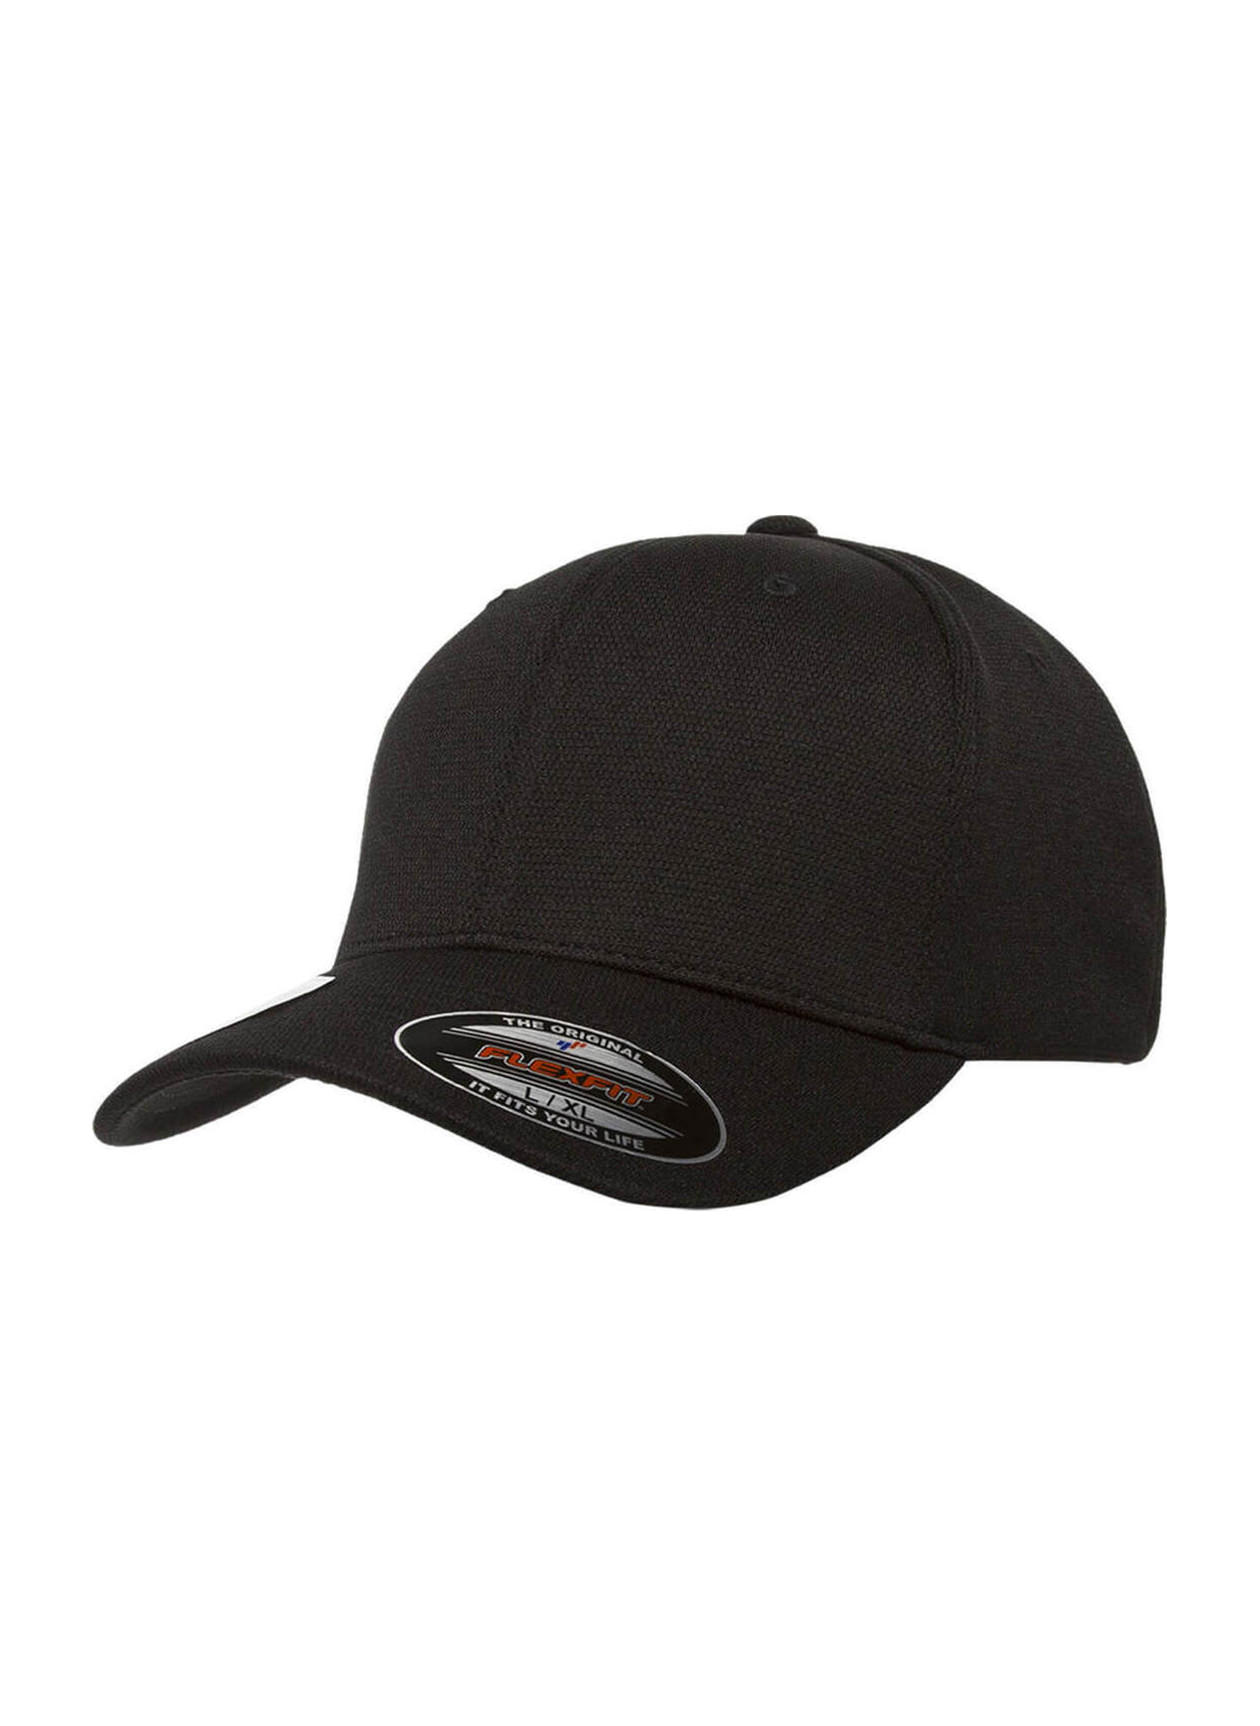 Flexfit Black Cool & Dry Sport Hat